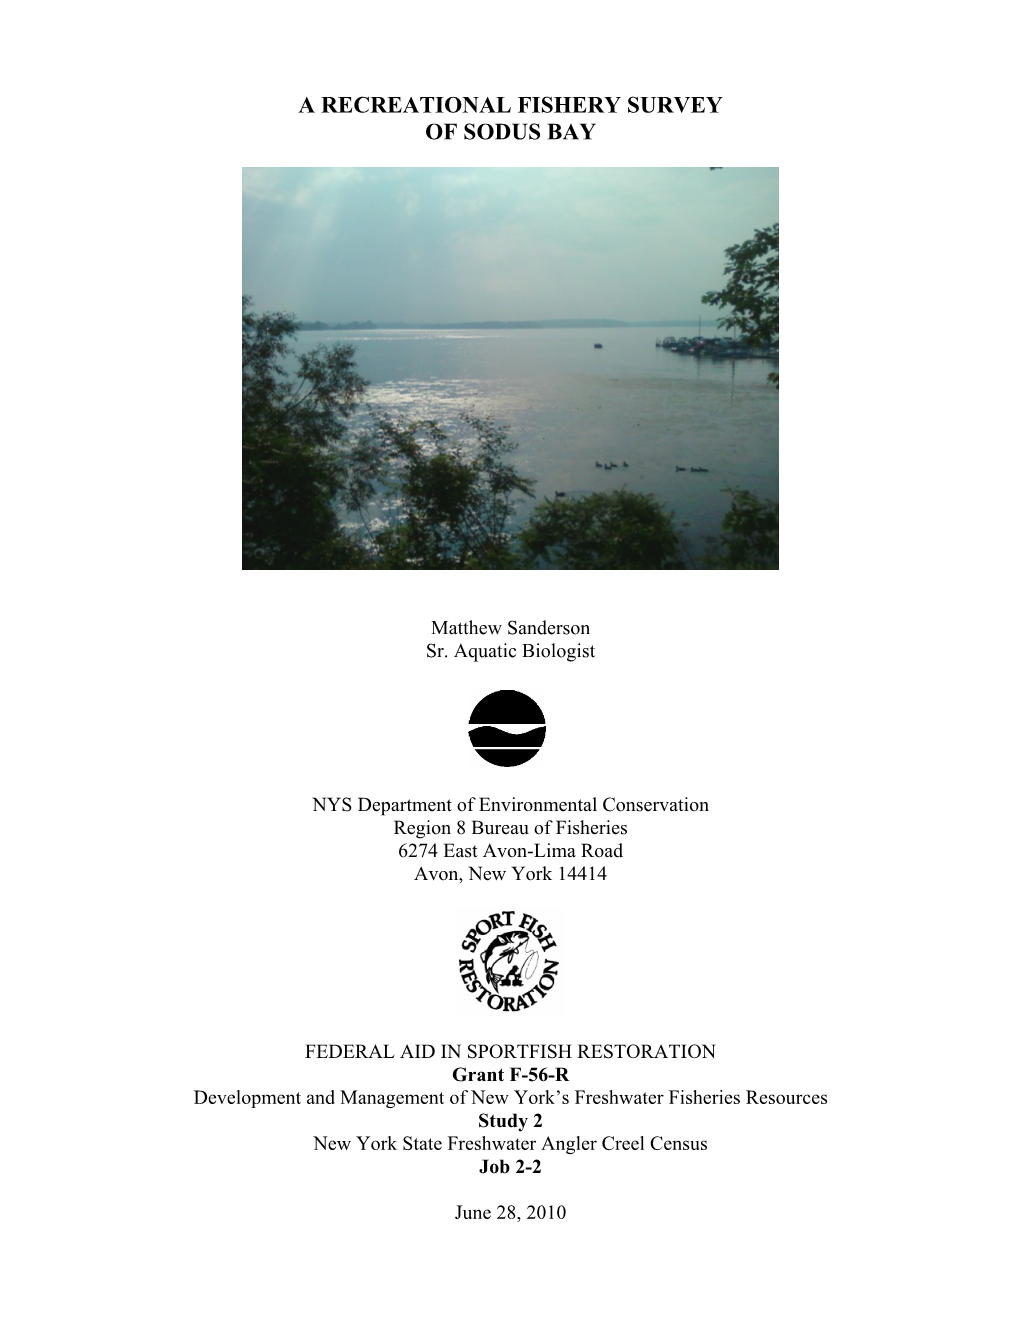 A Recreational Fishery Survey of Sodus Bay